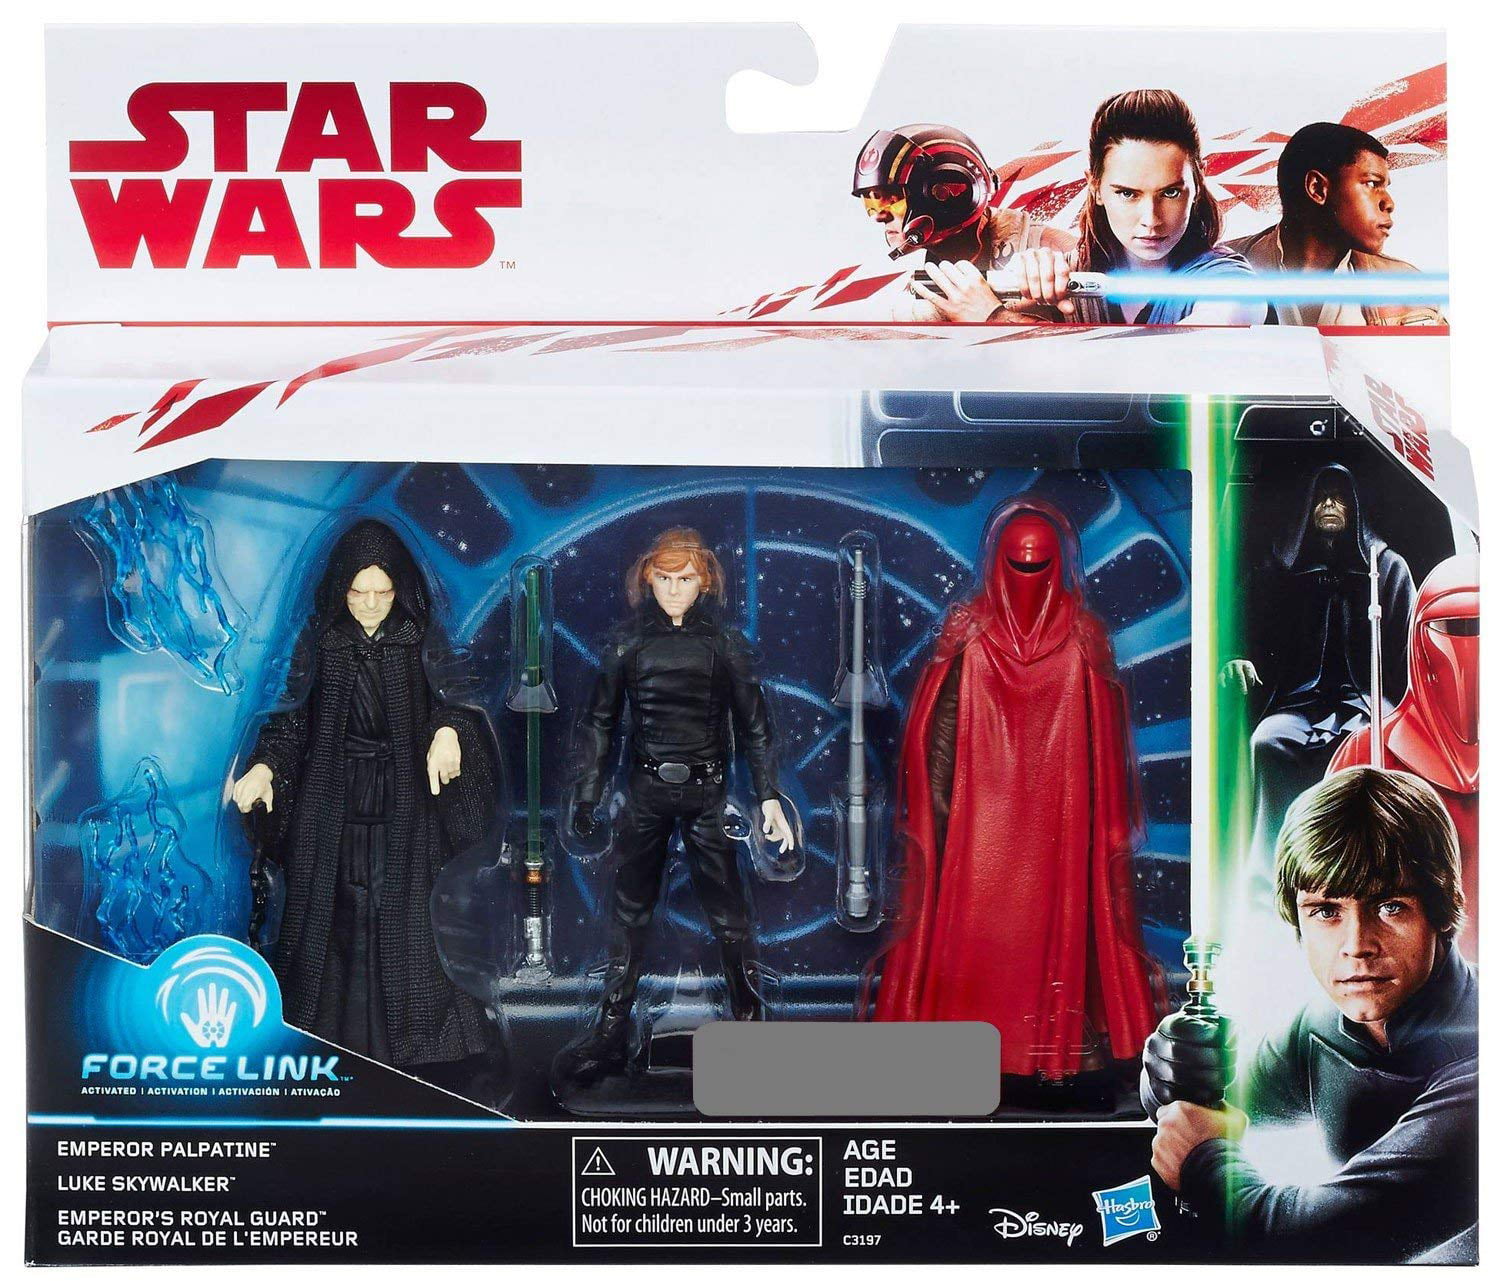 Revenge of the Sith Emperor Palpatine Firing Force Lightning Action Figure for sale online Hasbro Star Wars